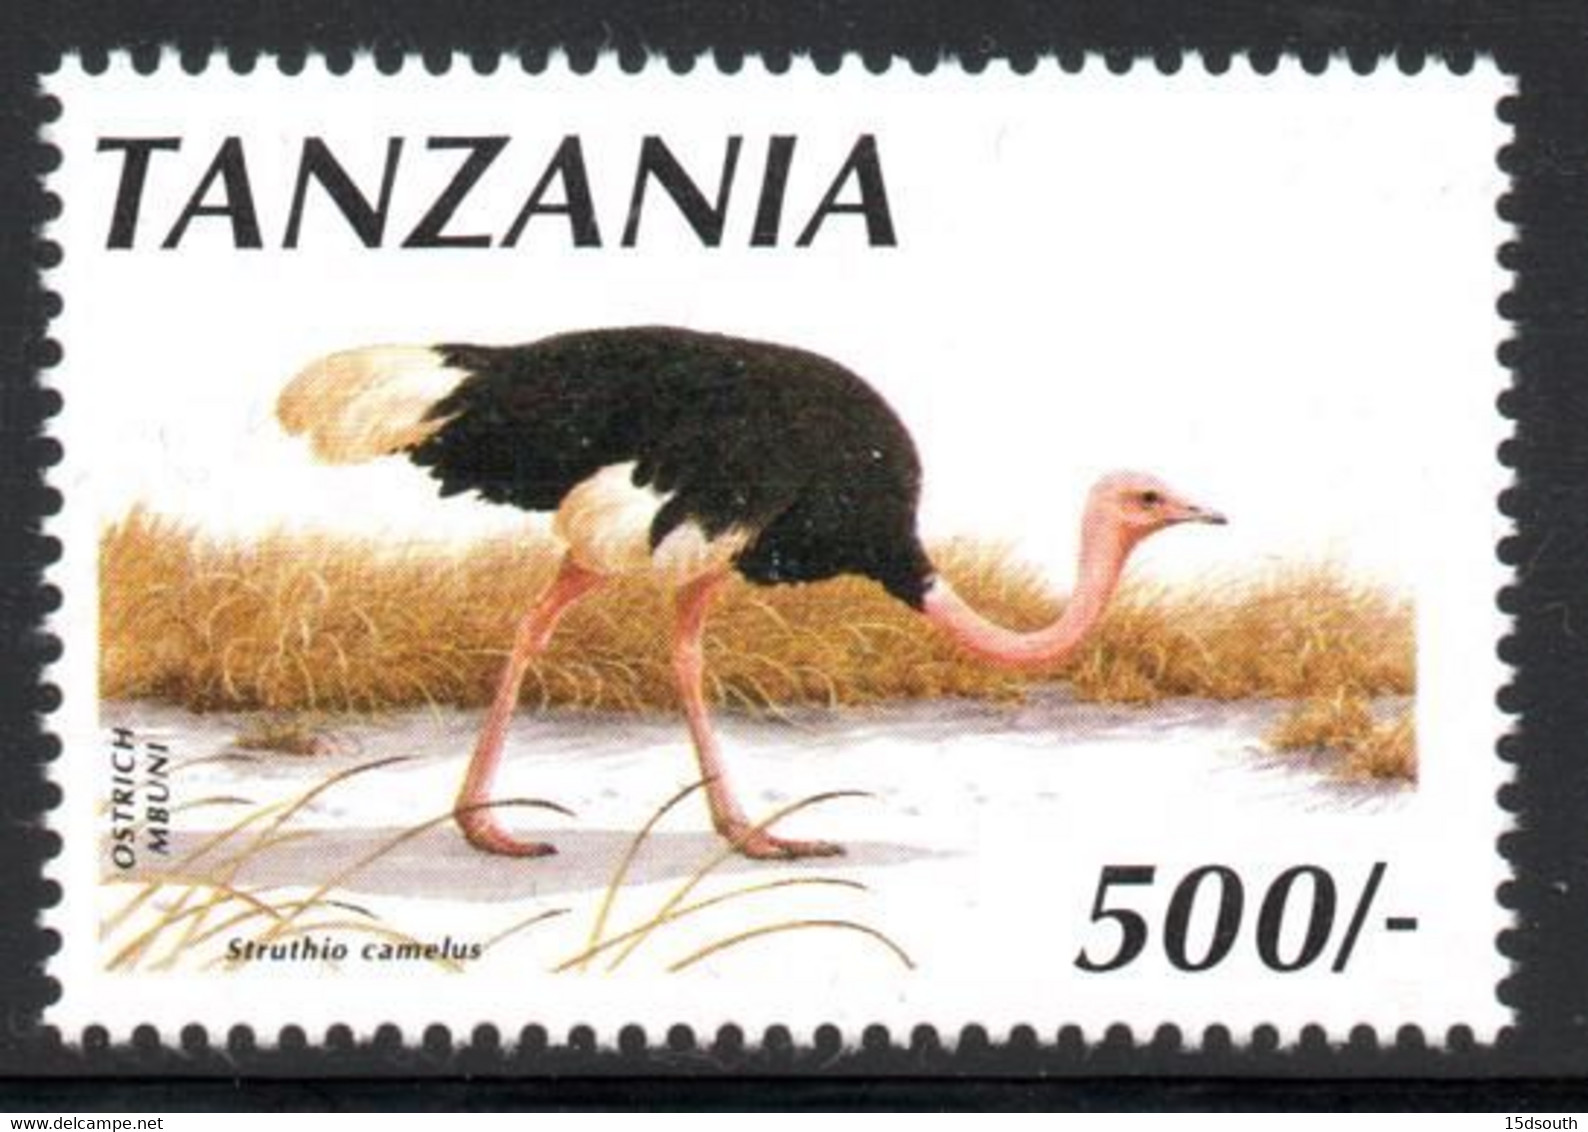 Tanzania - 1990 Birds 500s Ostrich (**) # SG 815 - Struzzi